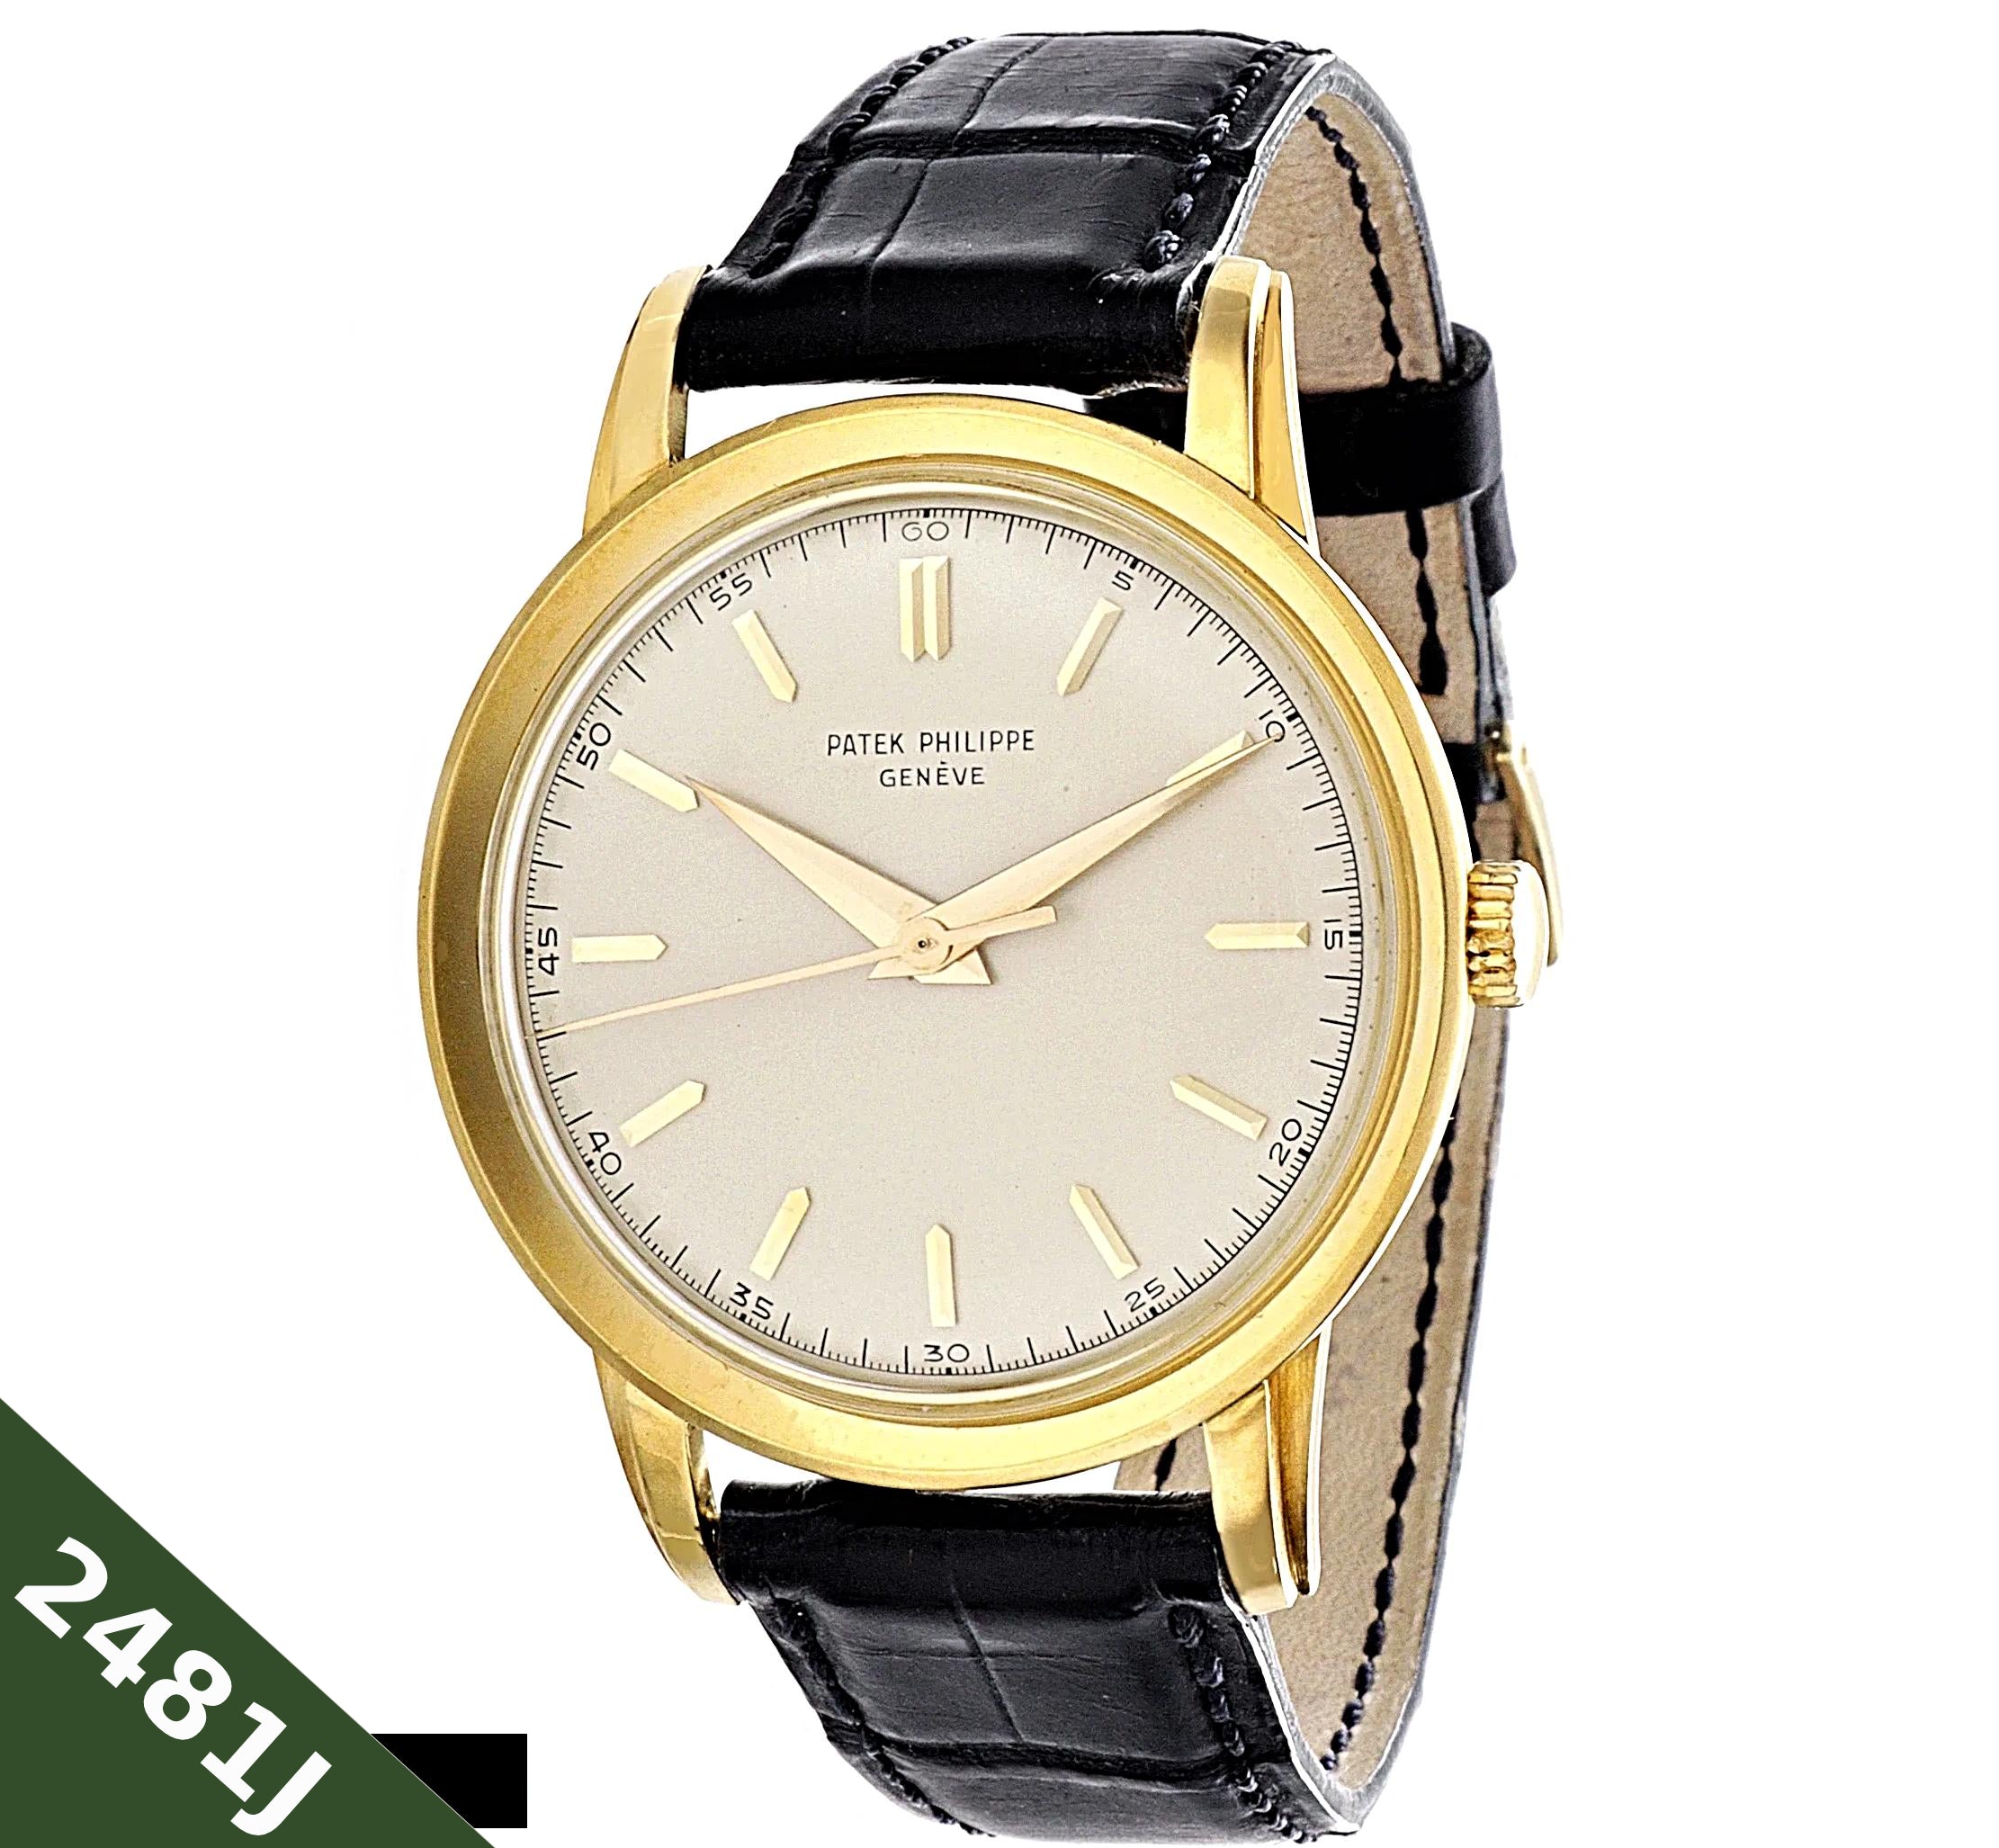 Men's 52mm Oversized Watch - Bling Bezel, Round Dial - Silicone Band - 14k  Gold Finish Quartz Movement Watch - Walmart.com